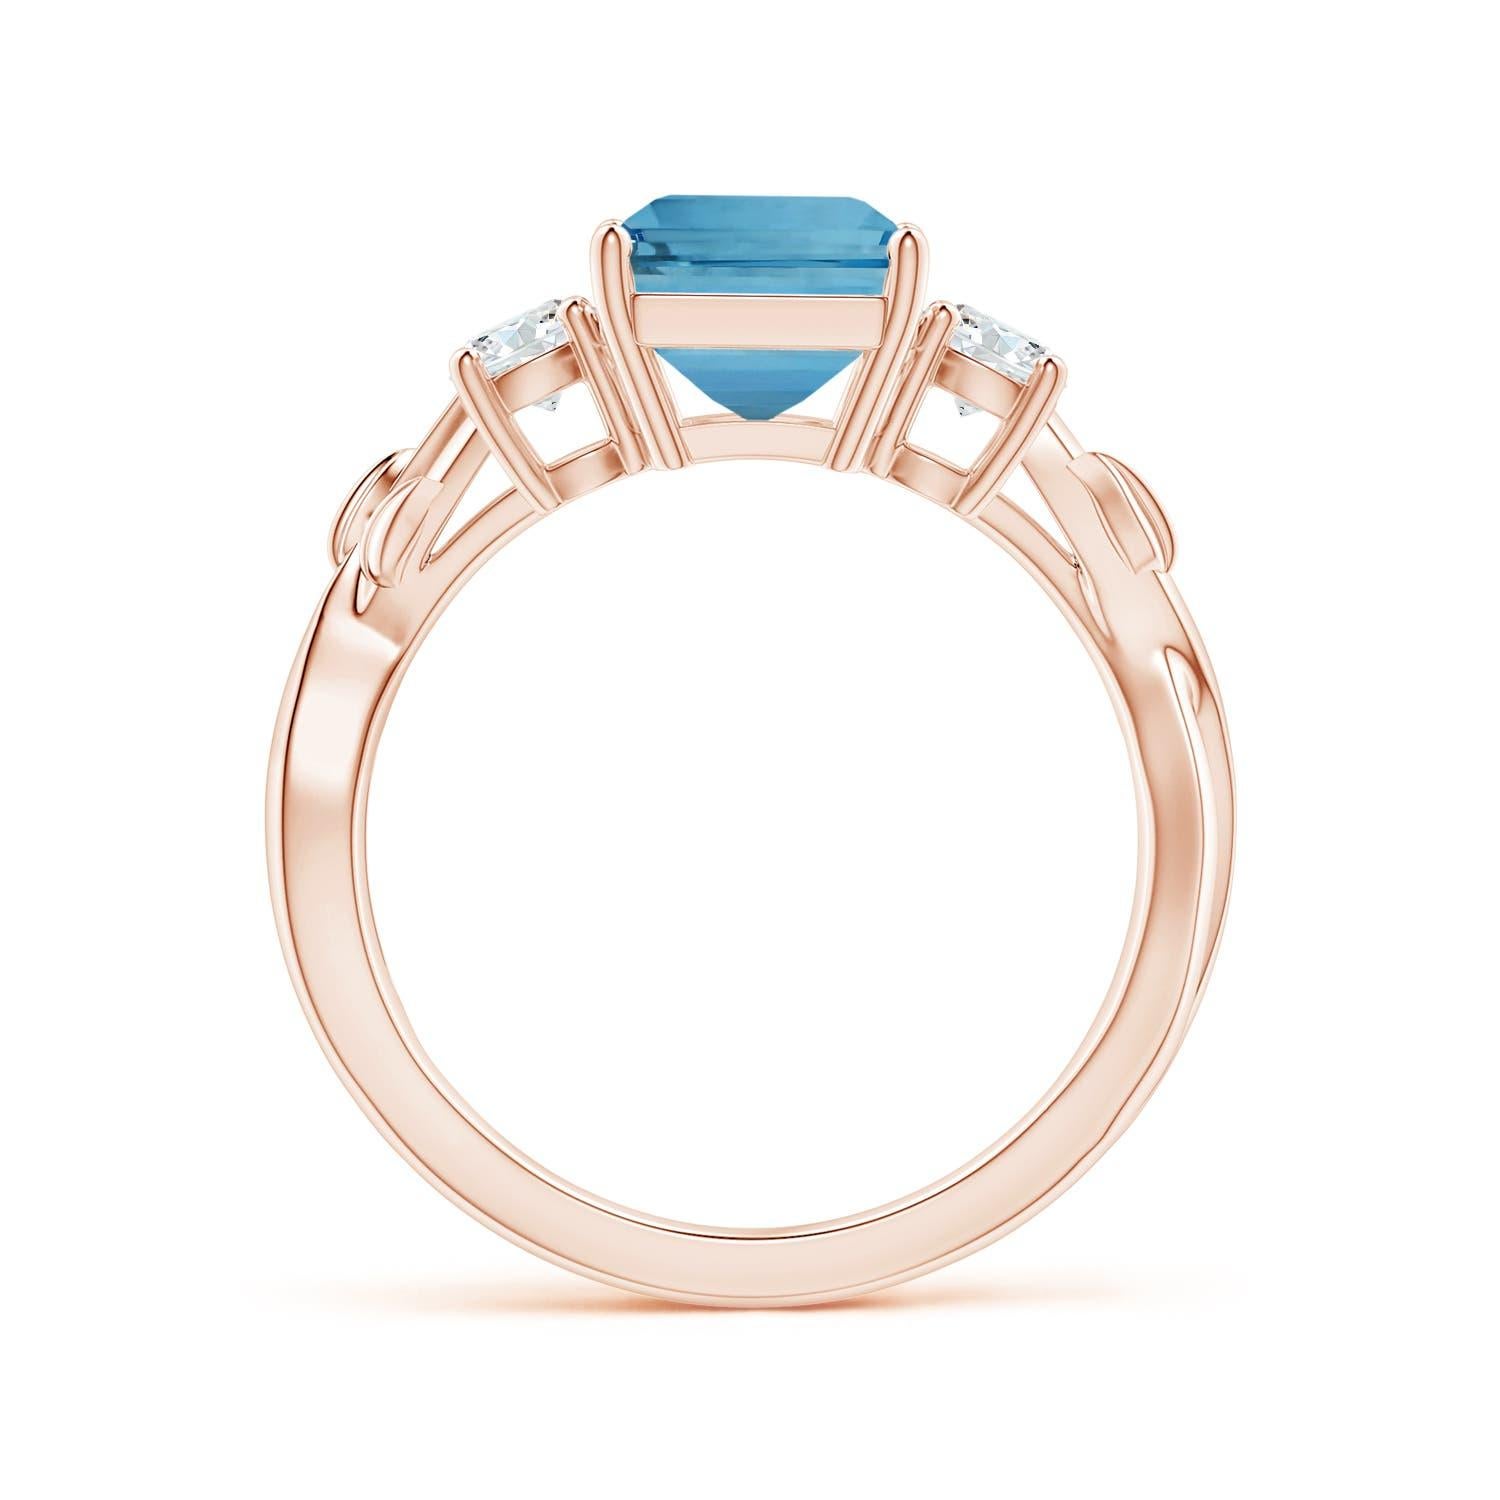 For Sale:  Angara Gia Certified Emerald-Cut Aquamarine 3-Stone Diamond Ring in Rose Gold 2